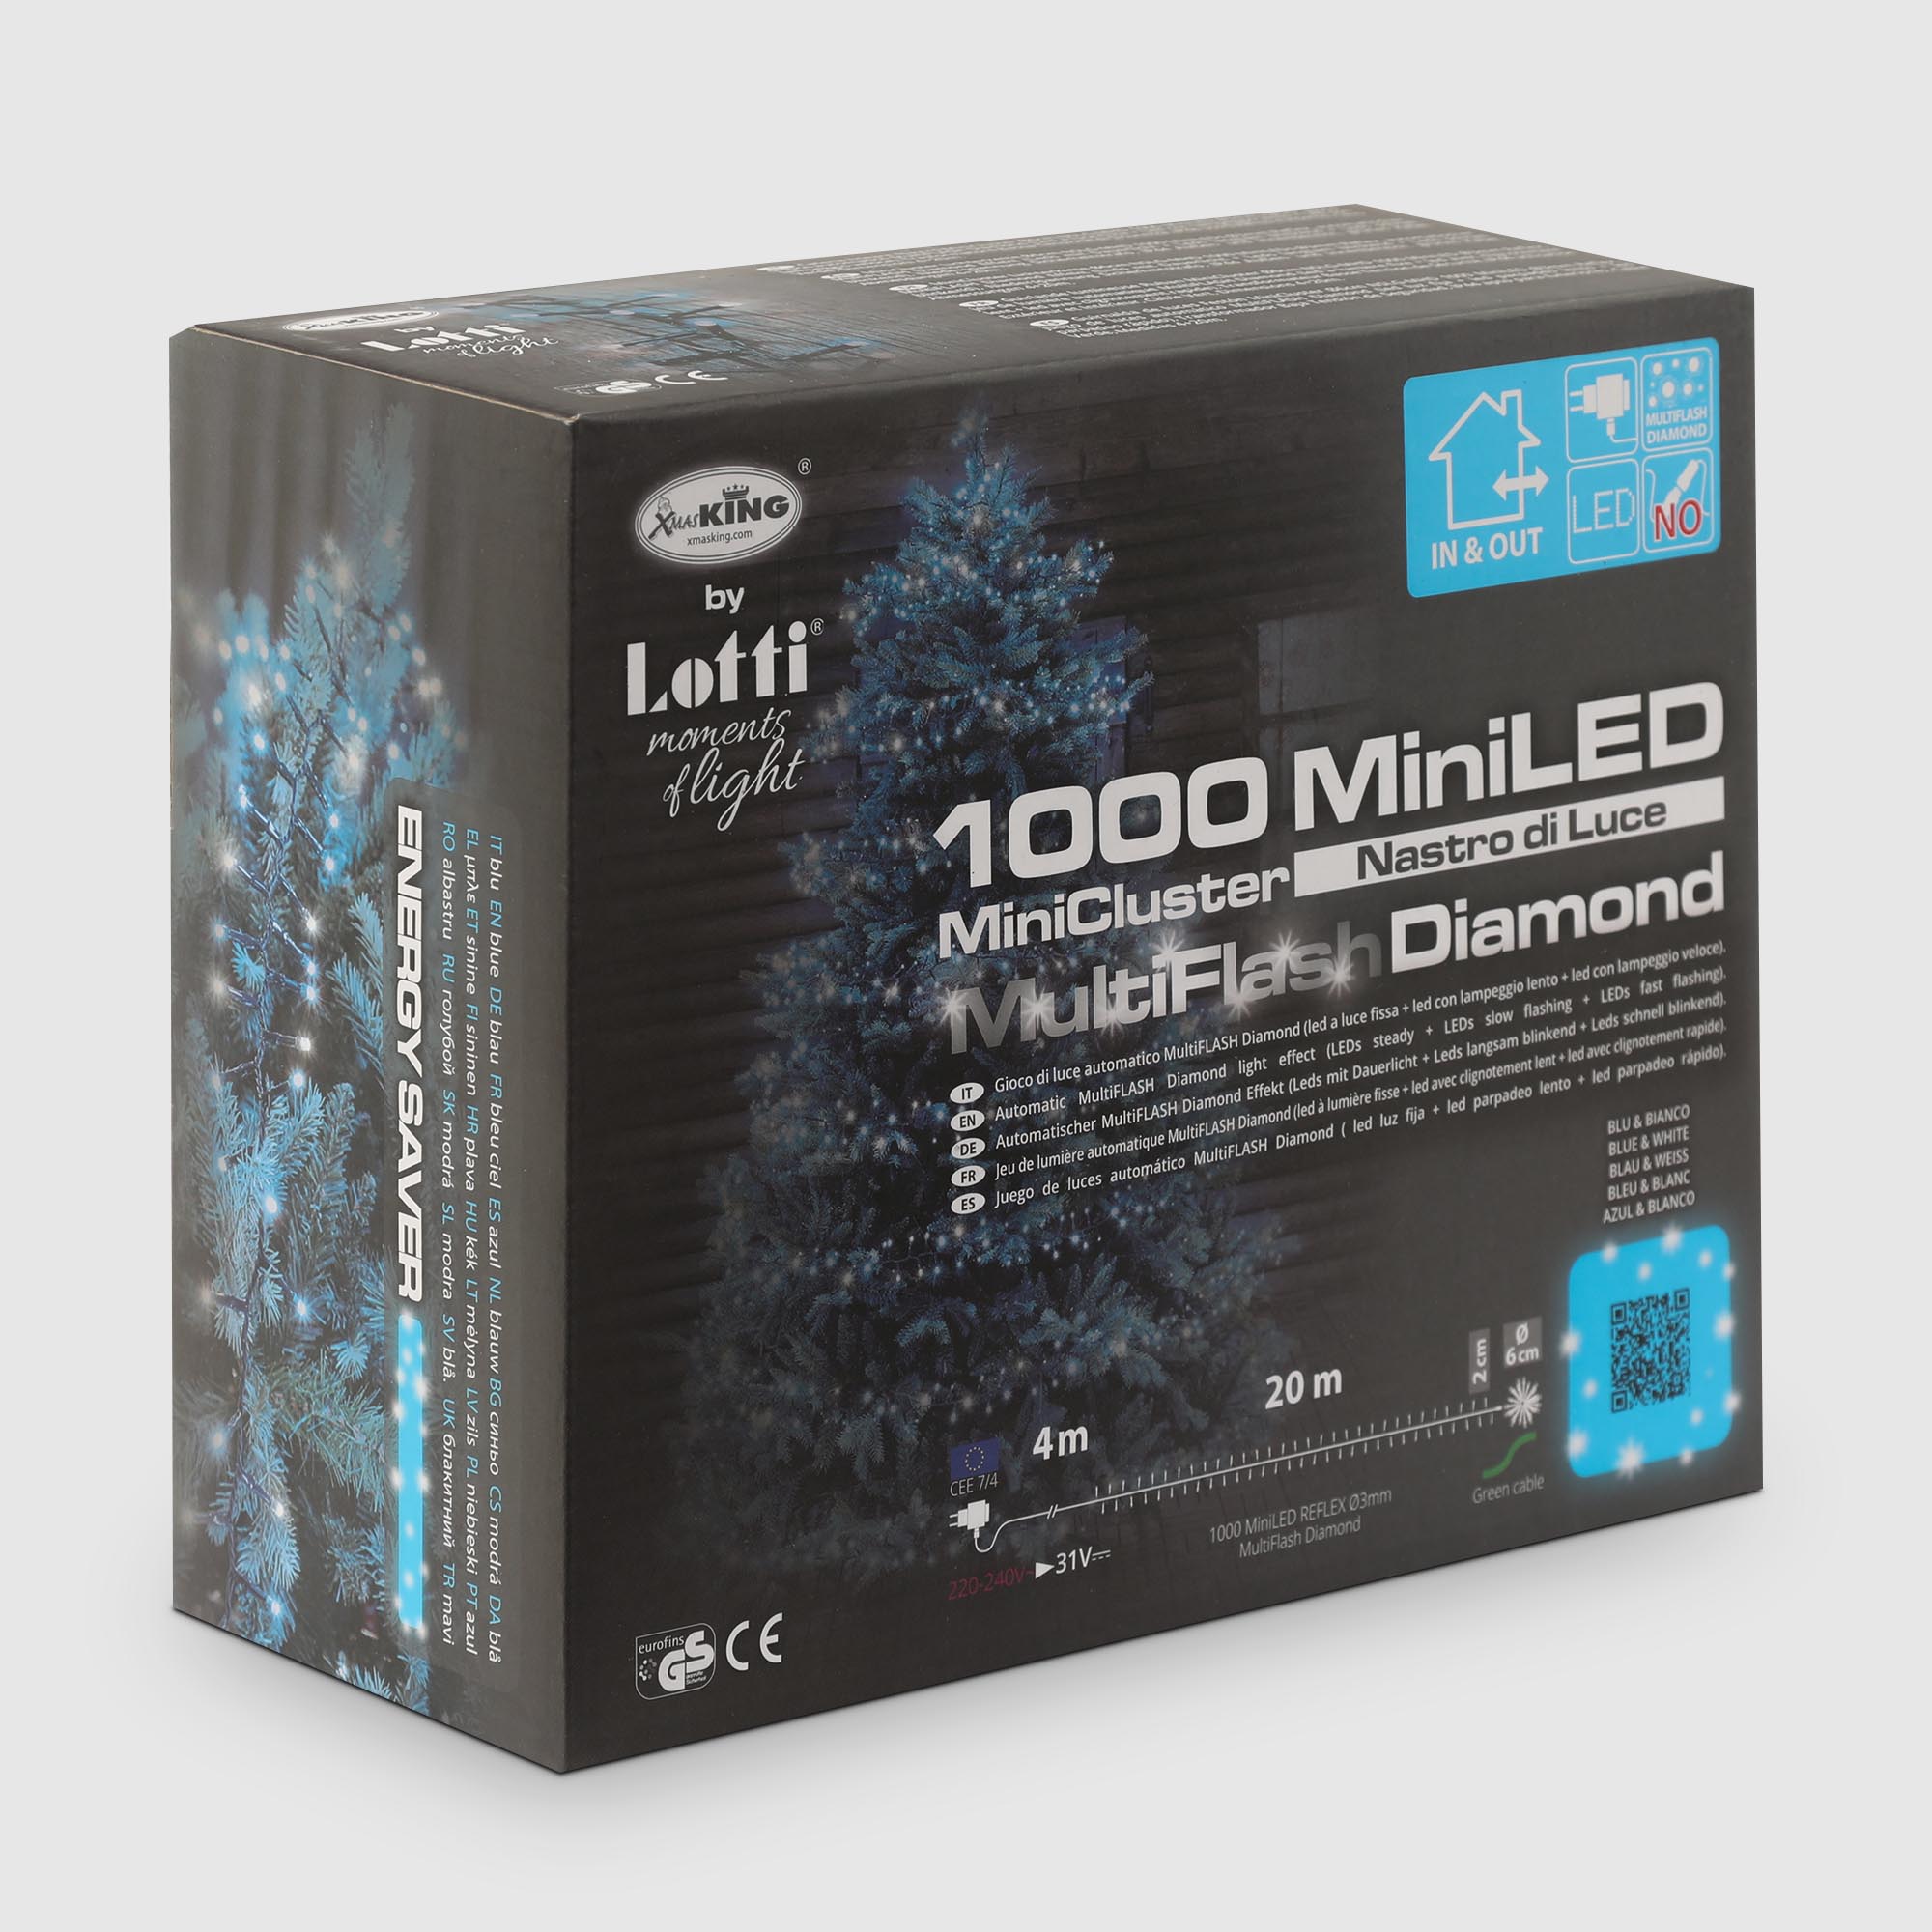 Гирлянда Lotti NSLG-MHD Minicluster 1000 голубых/белых miniled 4+20 м со стартовым шнуром, цвет зеленый - фото 9